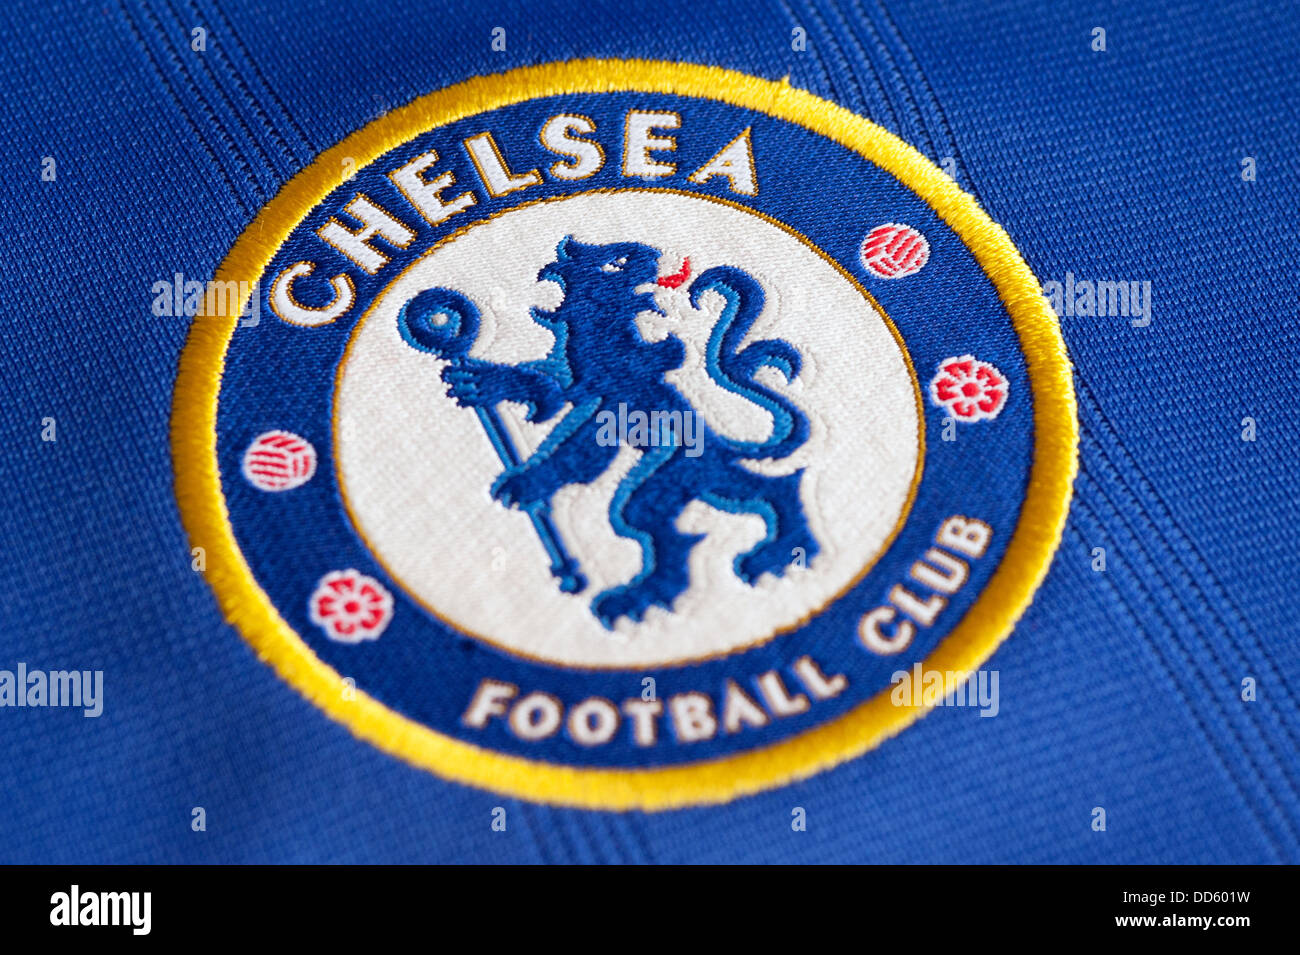 Chelsea FC Club Crest Stock Photo